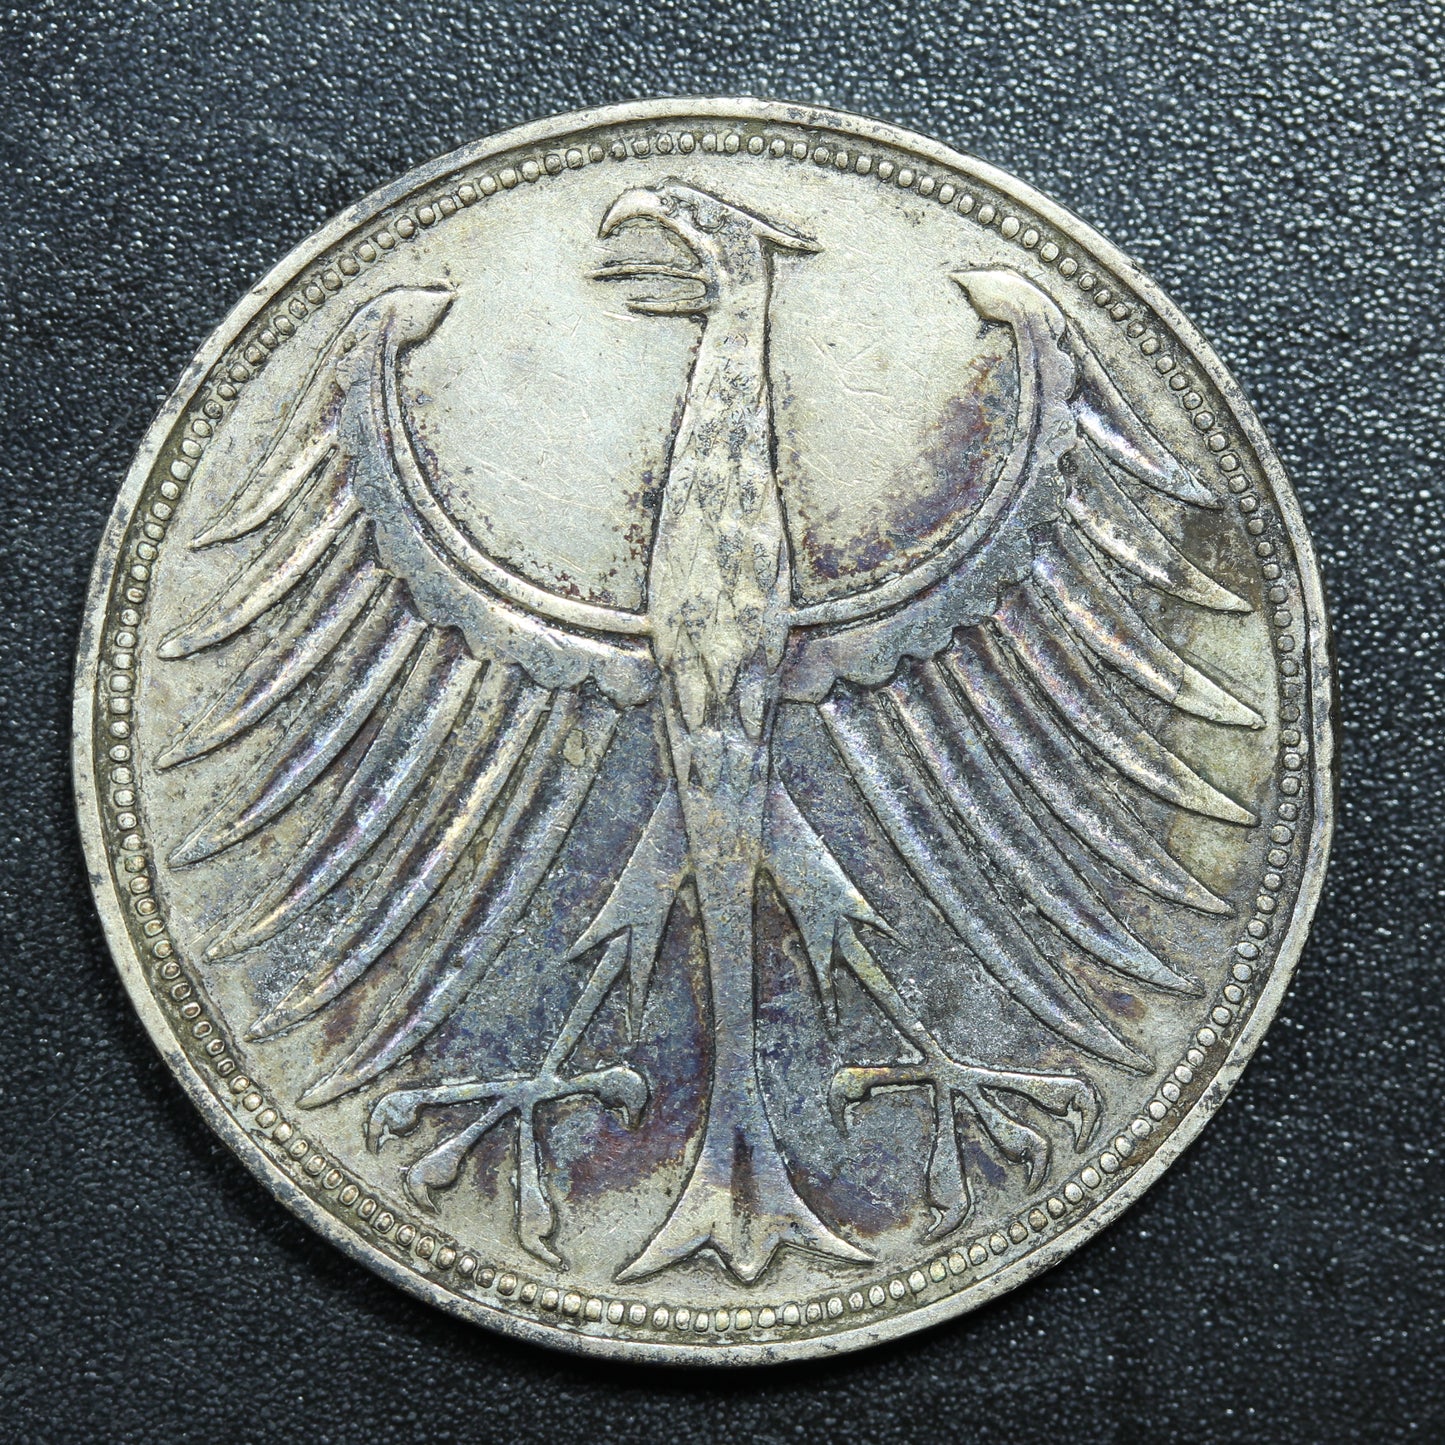 1951 D German 5 Funf Mark Silver Coin - KM# 112